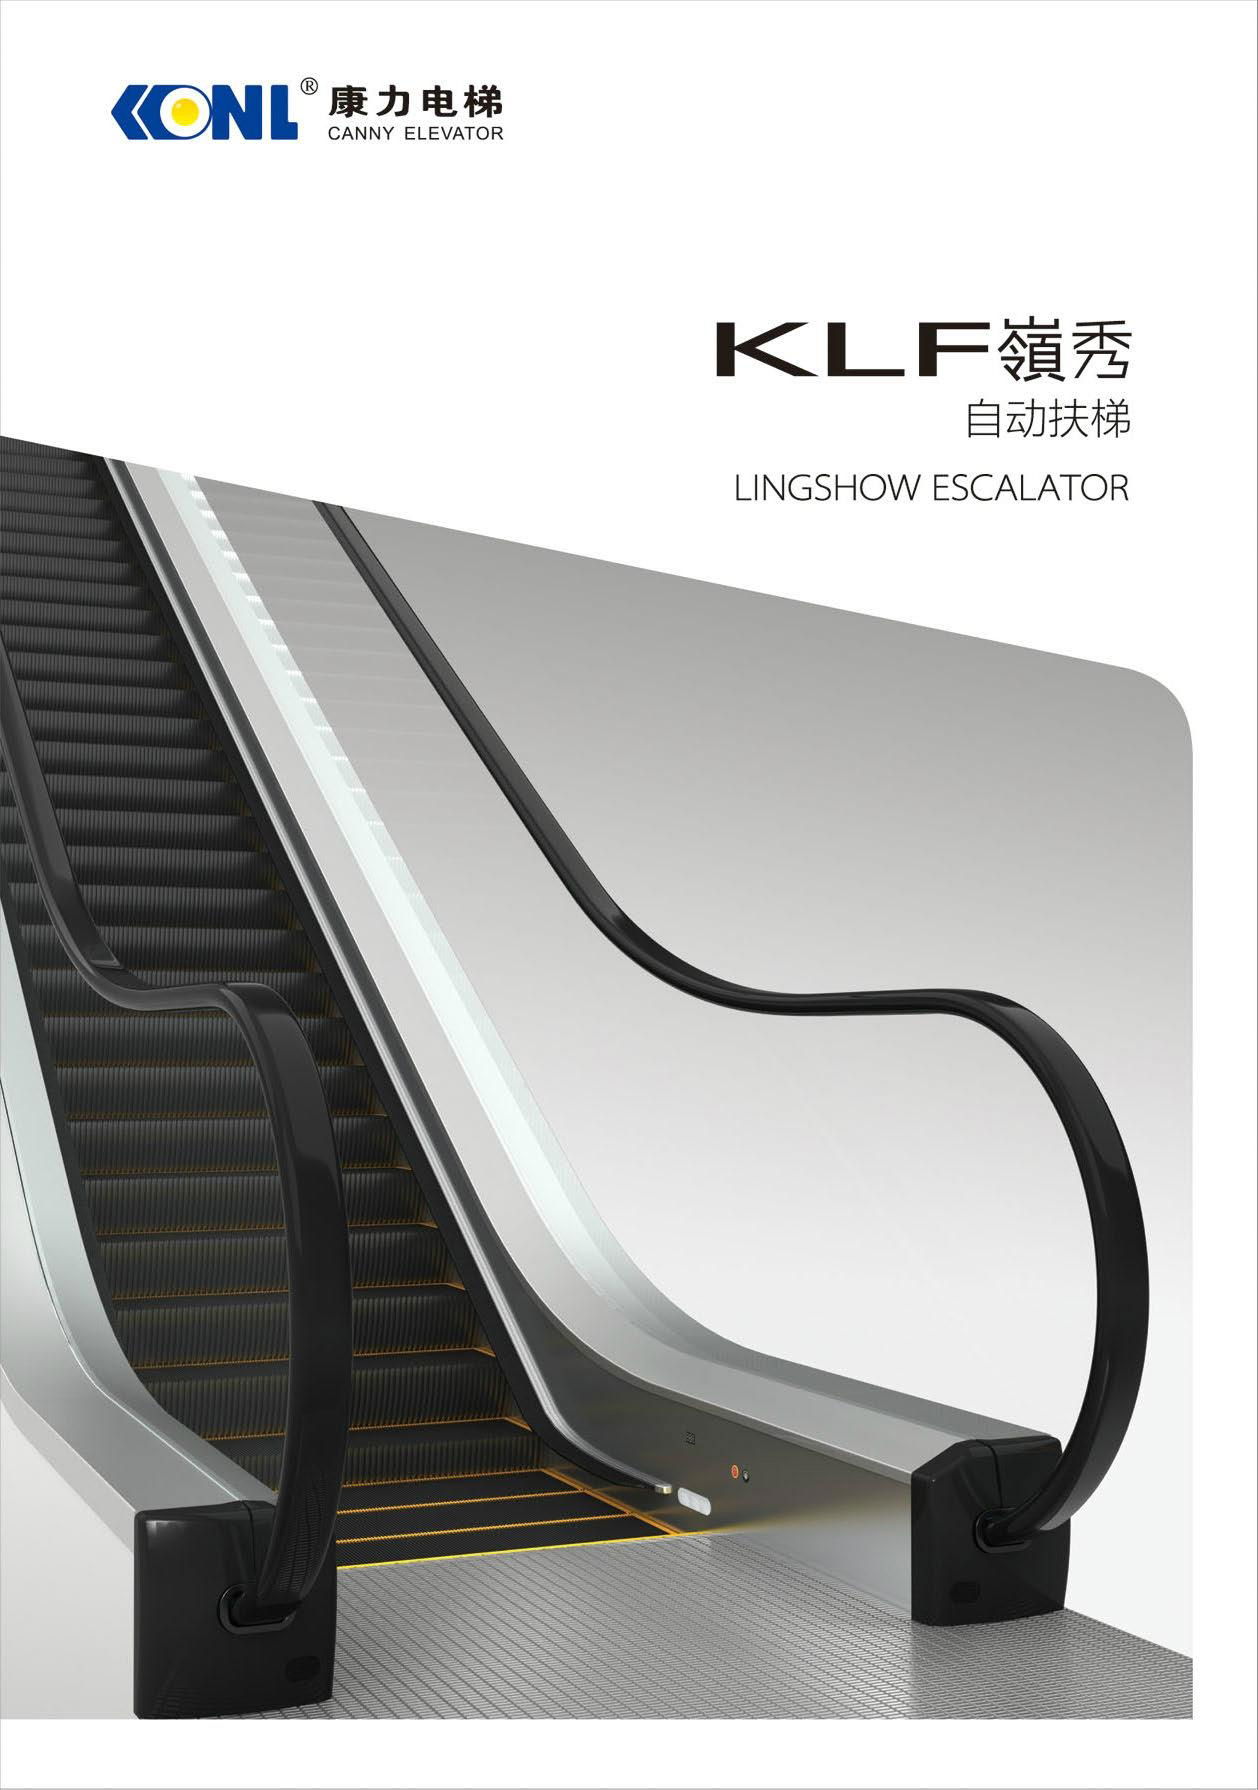 Commercial Escalator